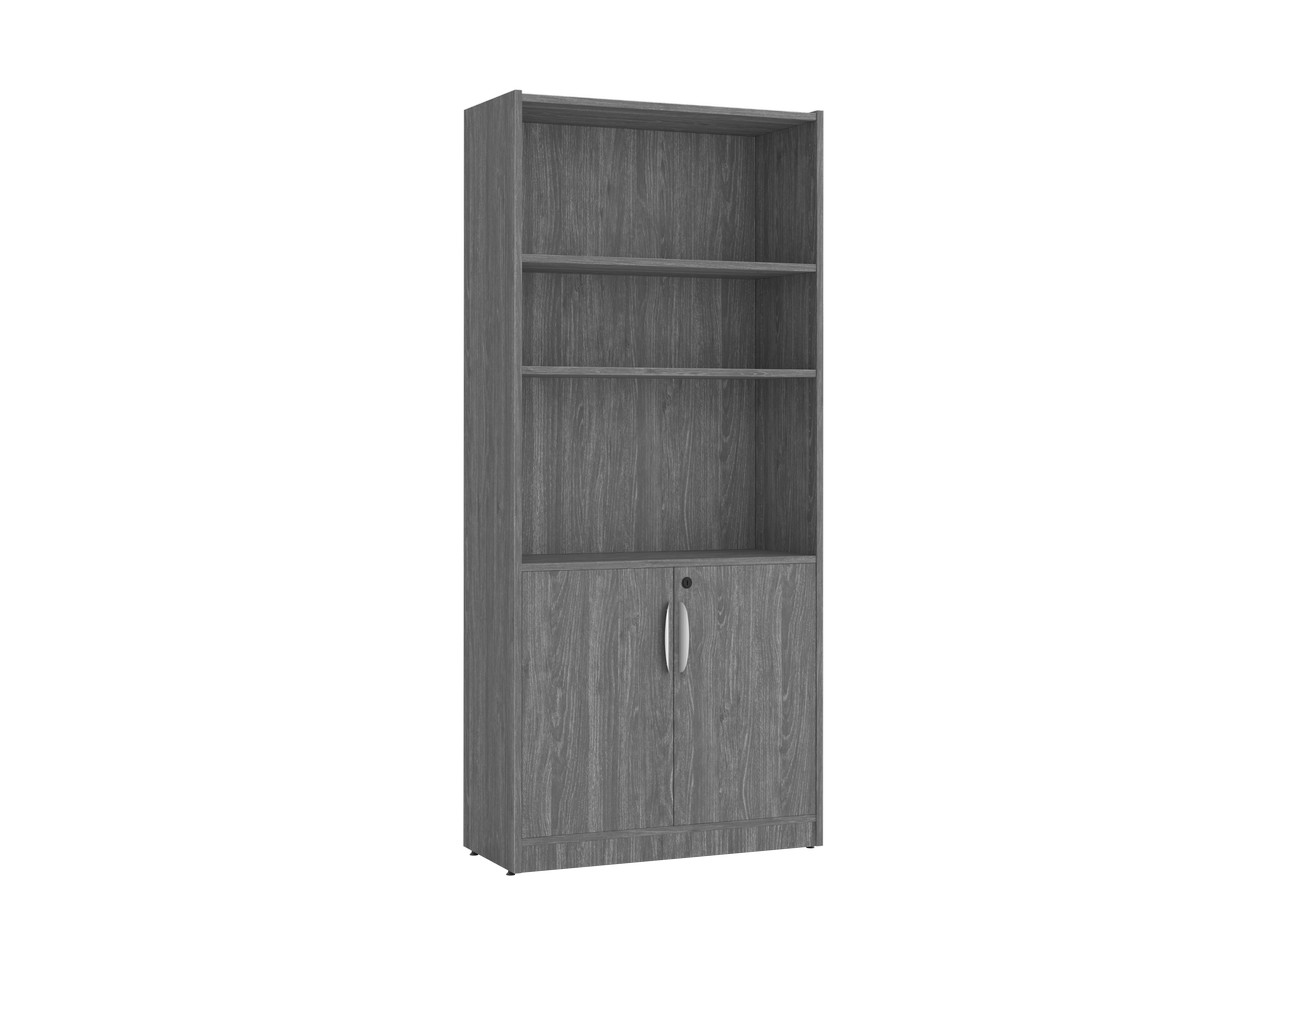 6 Shelf Heavy Duty Bookcase with Newport Grey Finish and Locking Doors